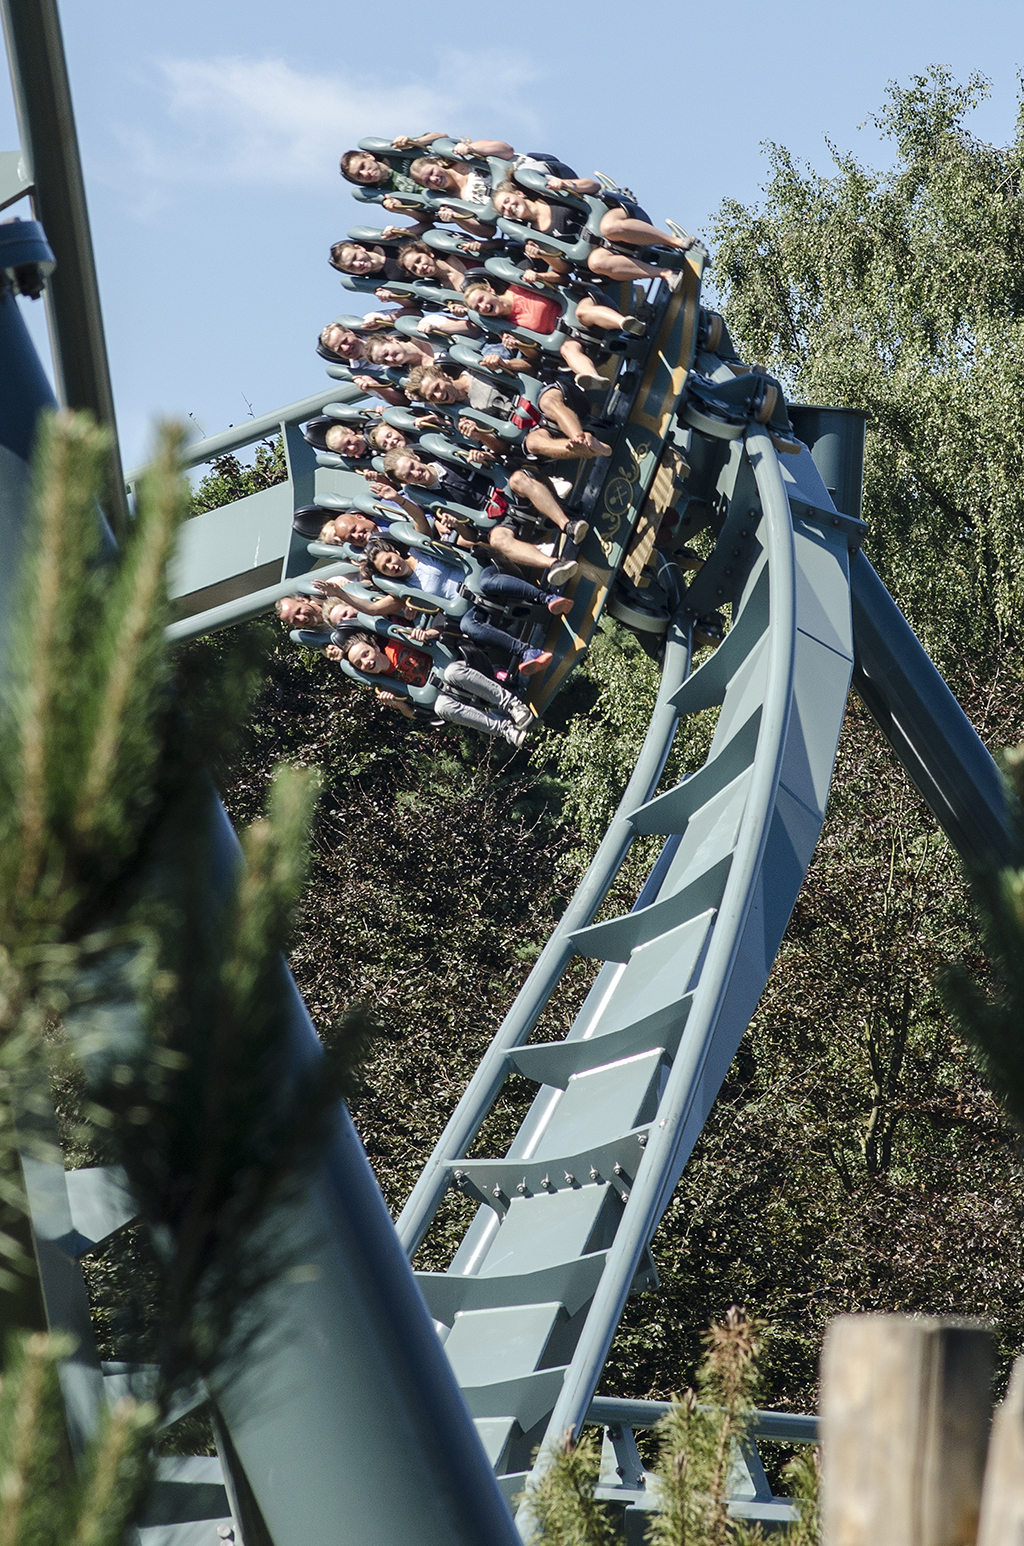 Efteling Kaatsheuvel Netherlands Baron 1898 rollercoaster dive coaster amusement park themepark 01